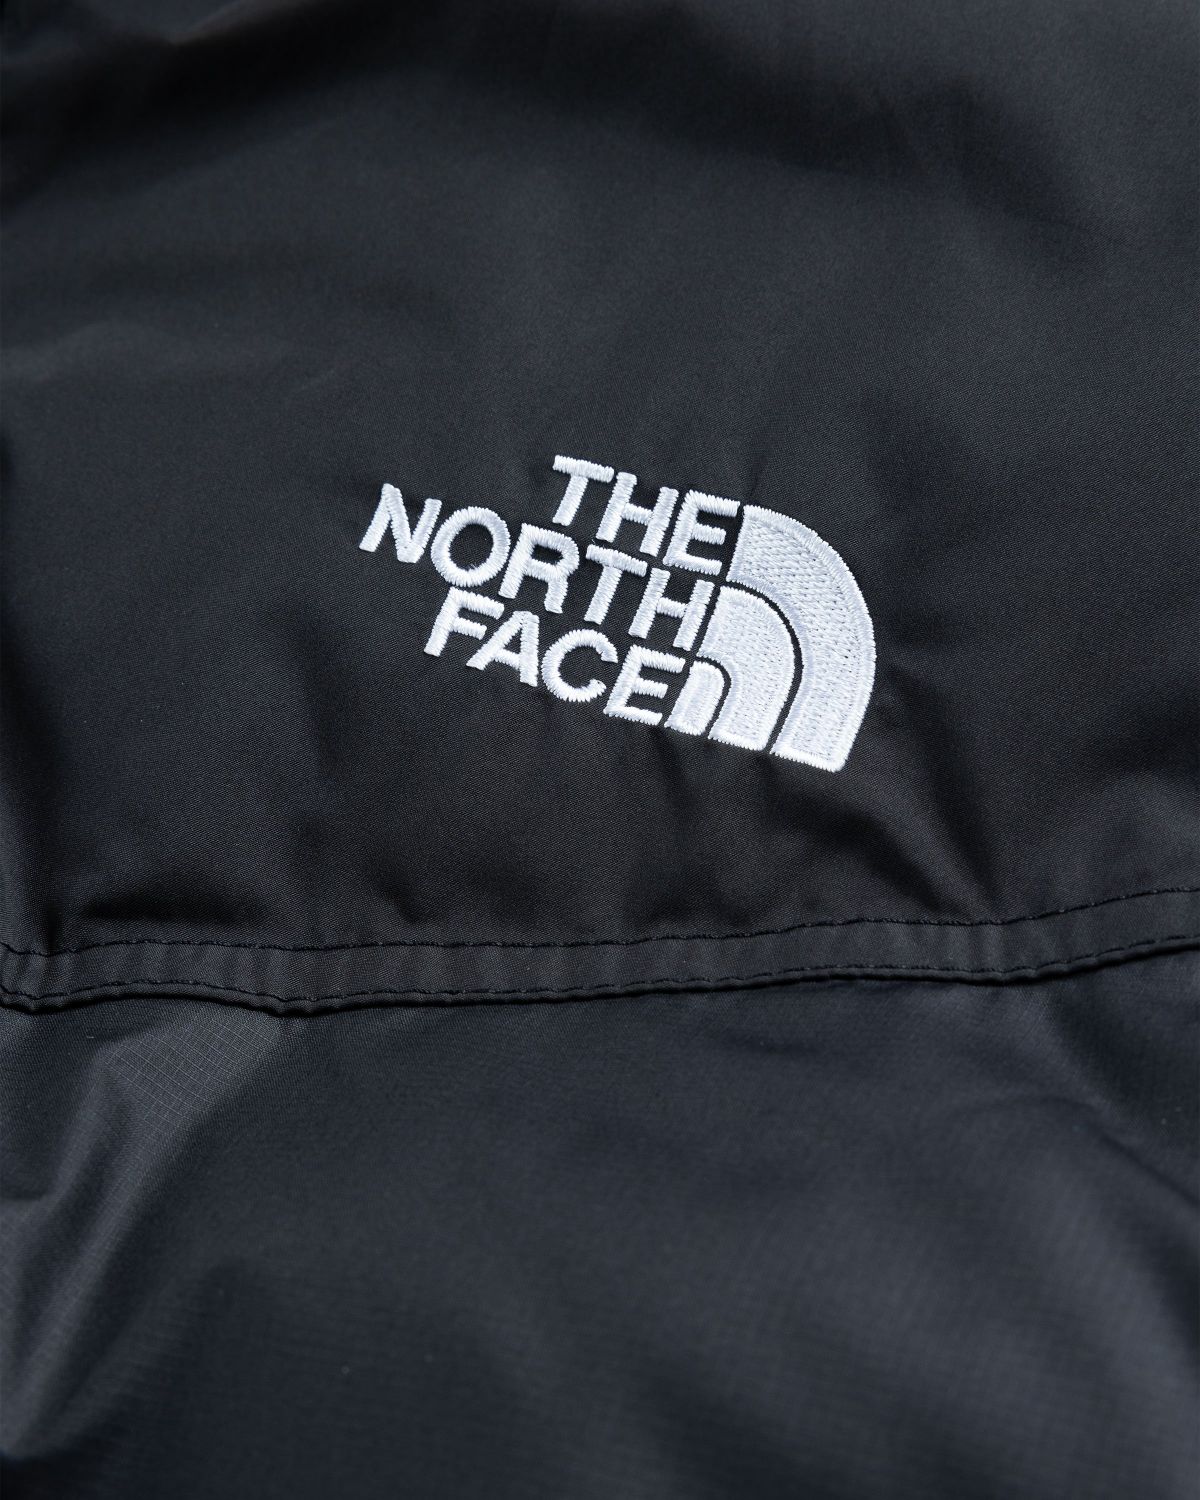 The North Face – Saikuru Jacket Black | Highsnobiety Shop